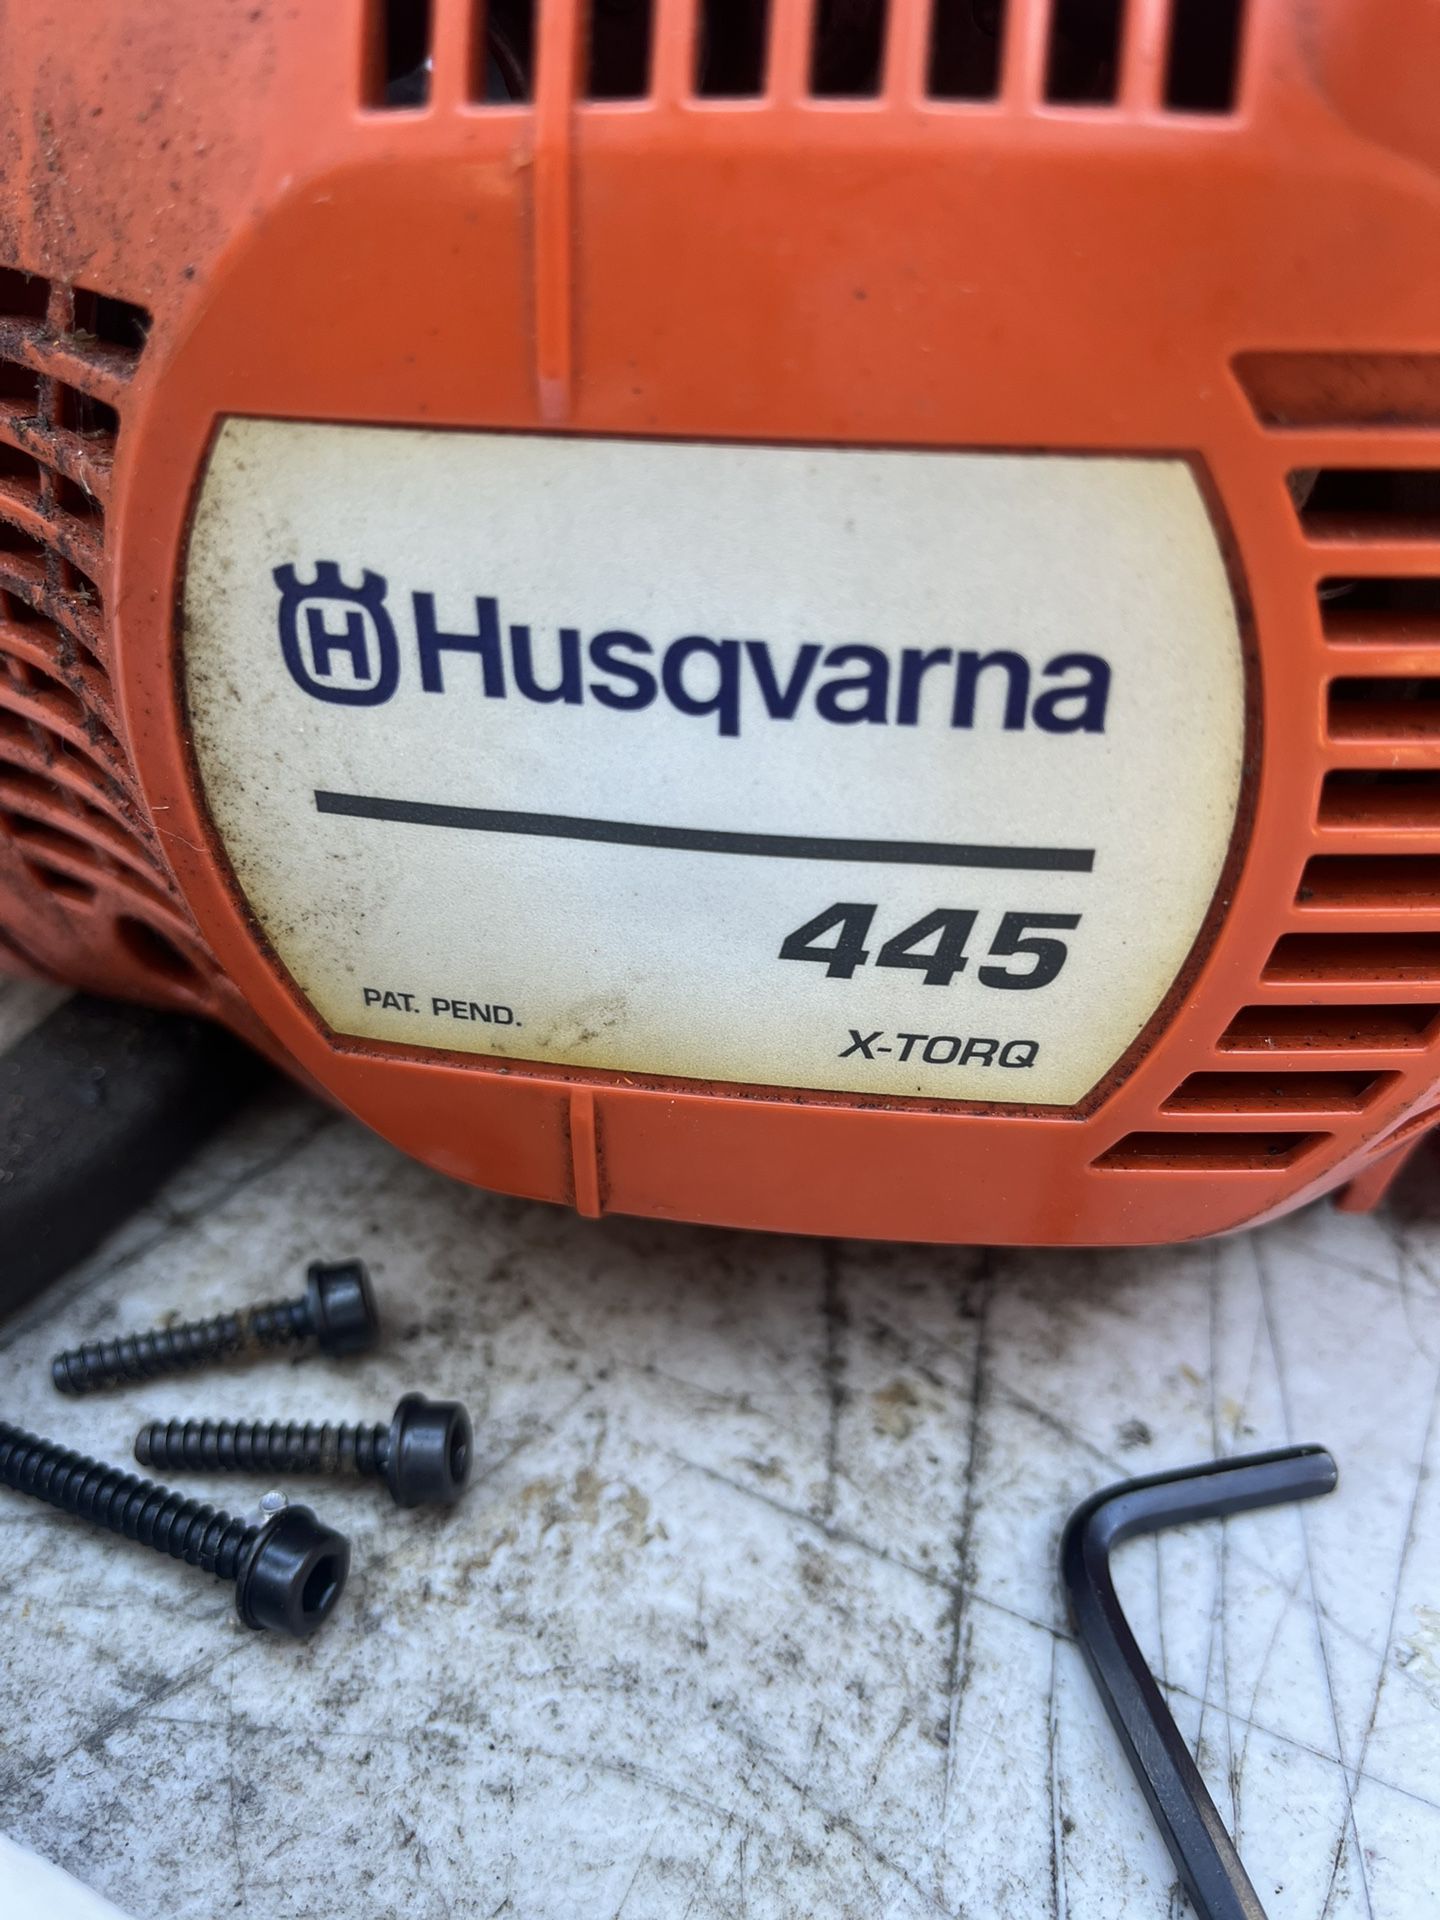 husqvarna 445 chain saw